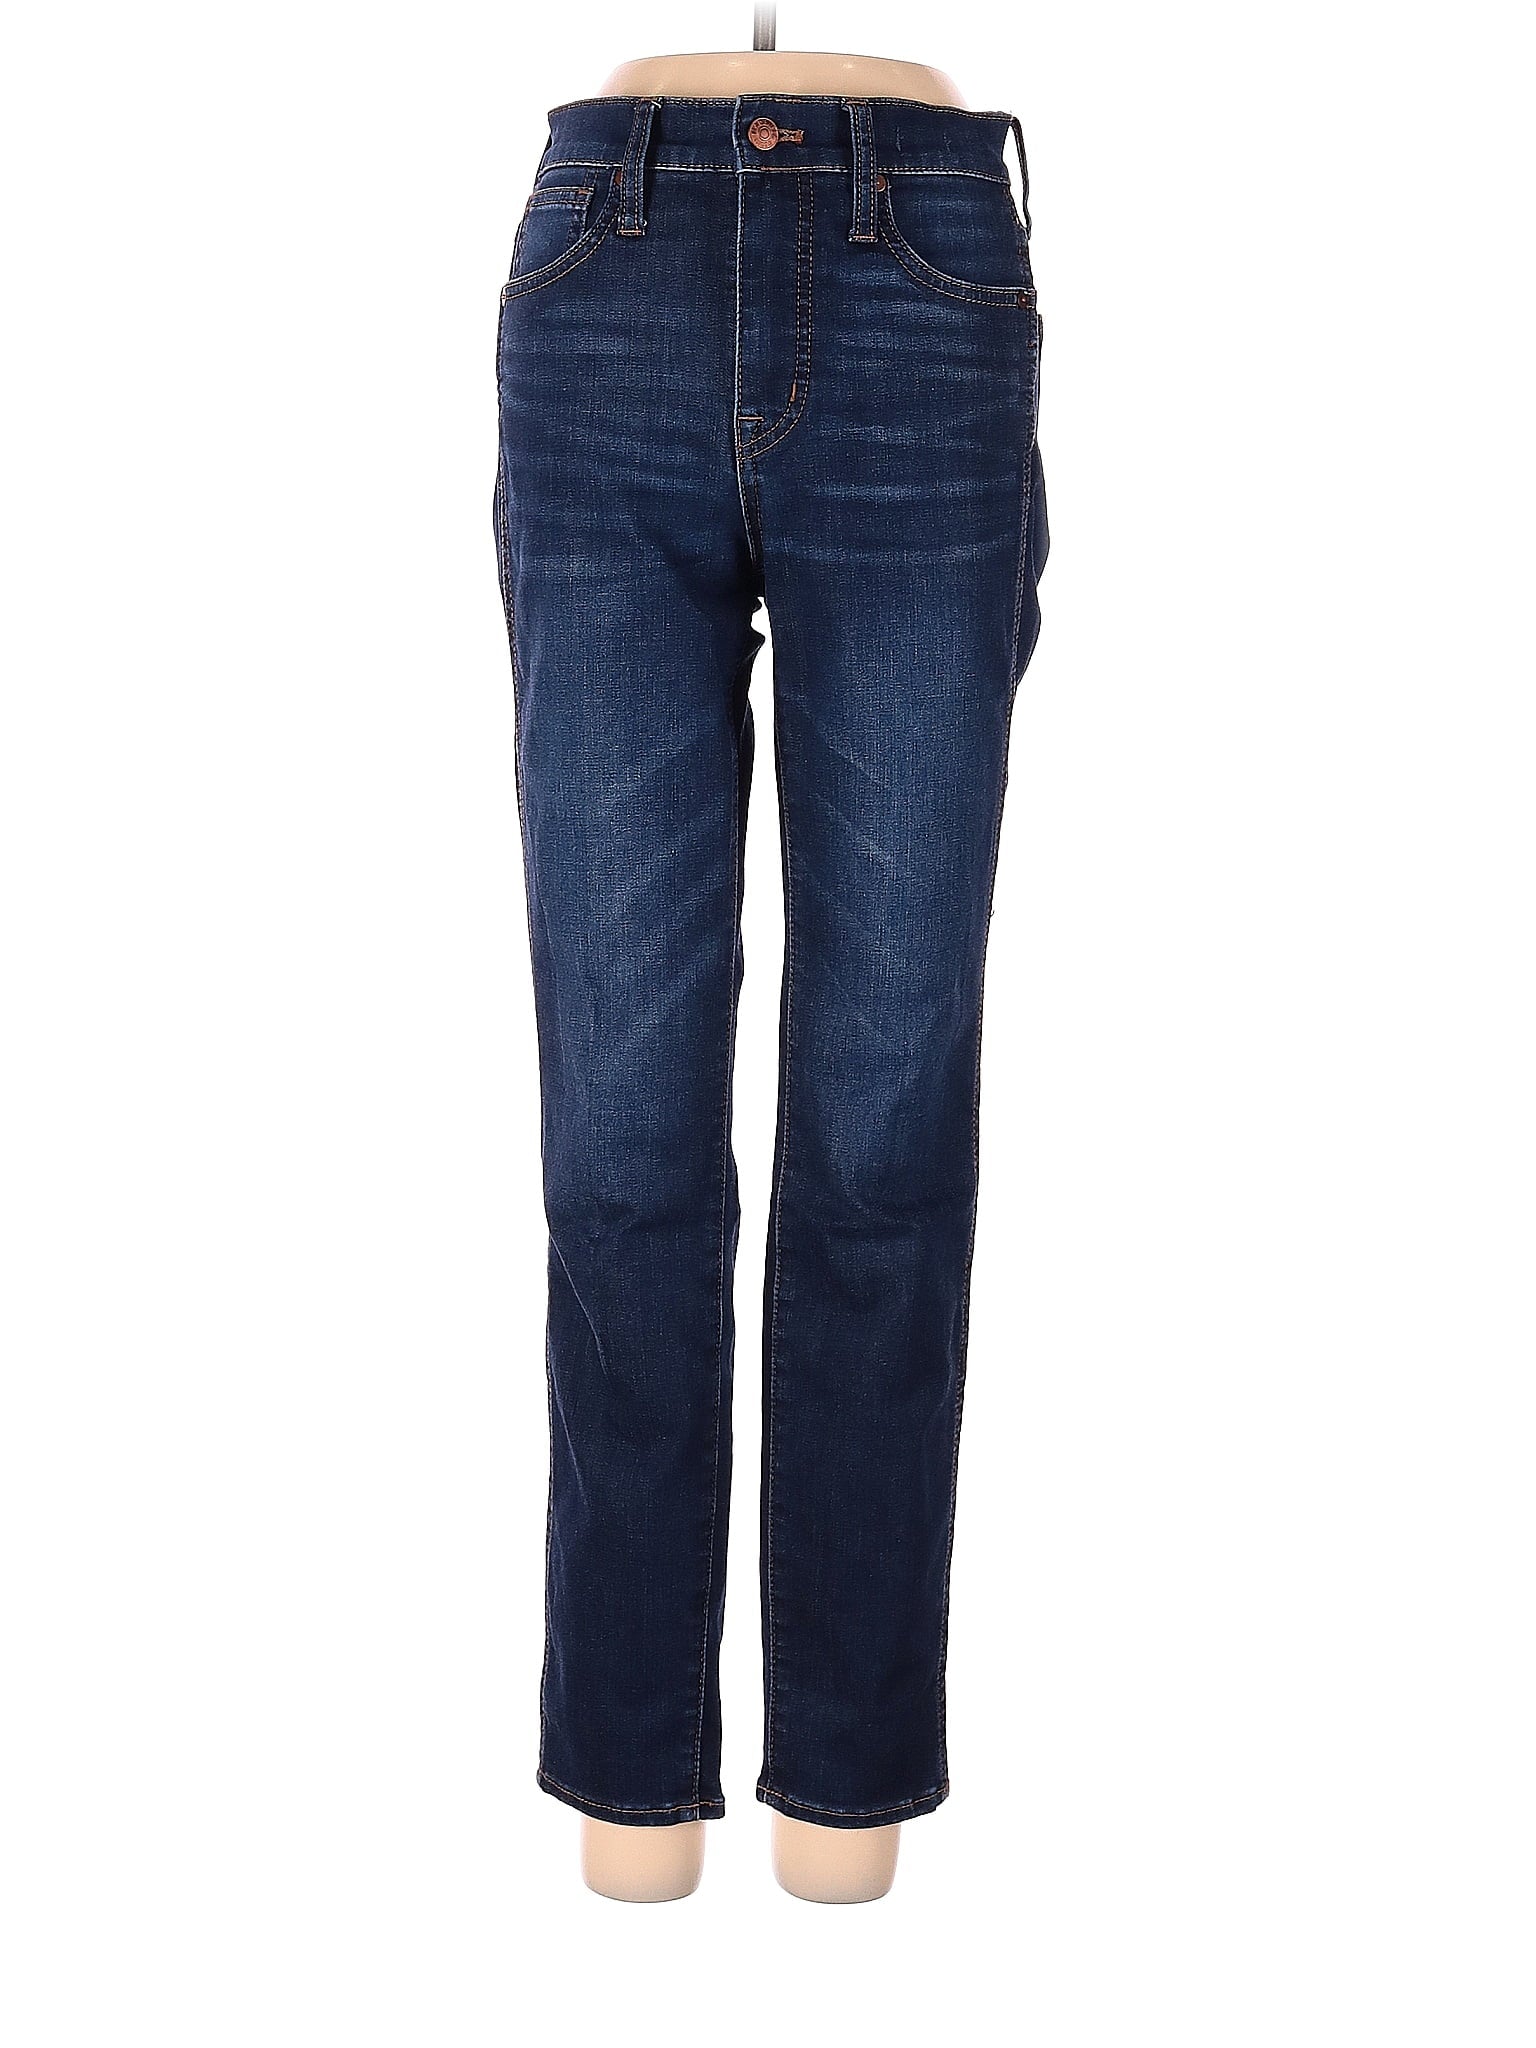 High-Rise Boyjeans Jeans in Dark Wash waist size - 23 P